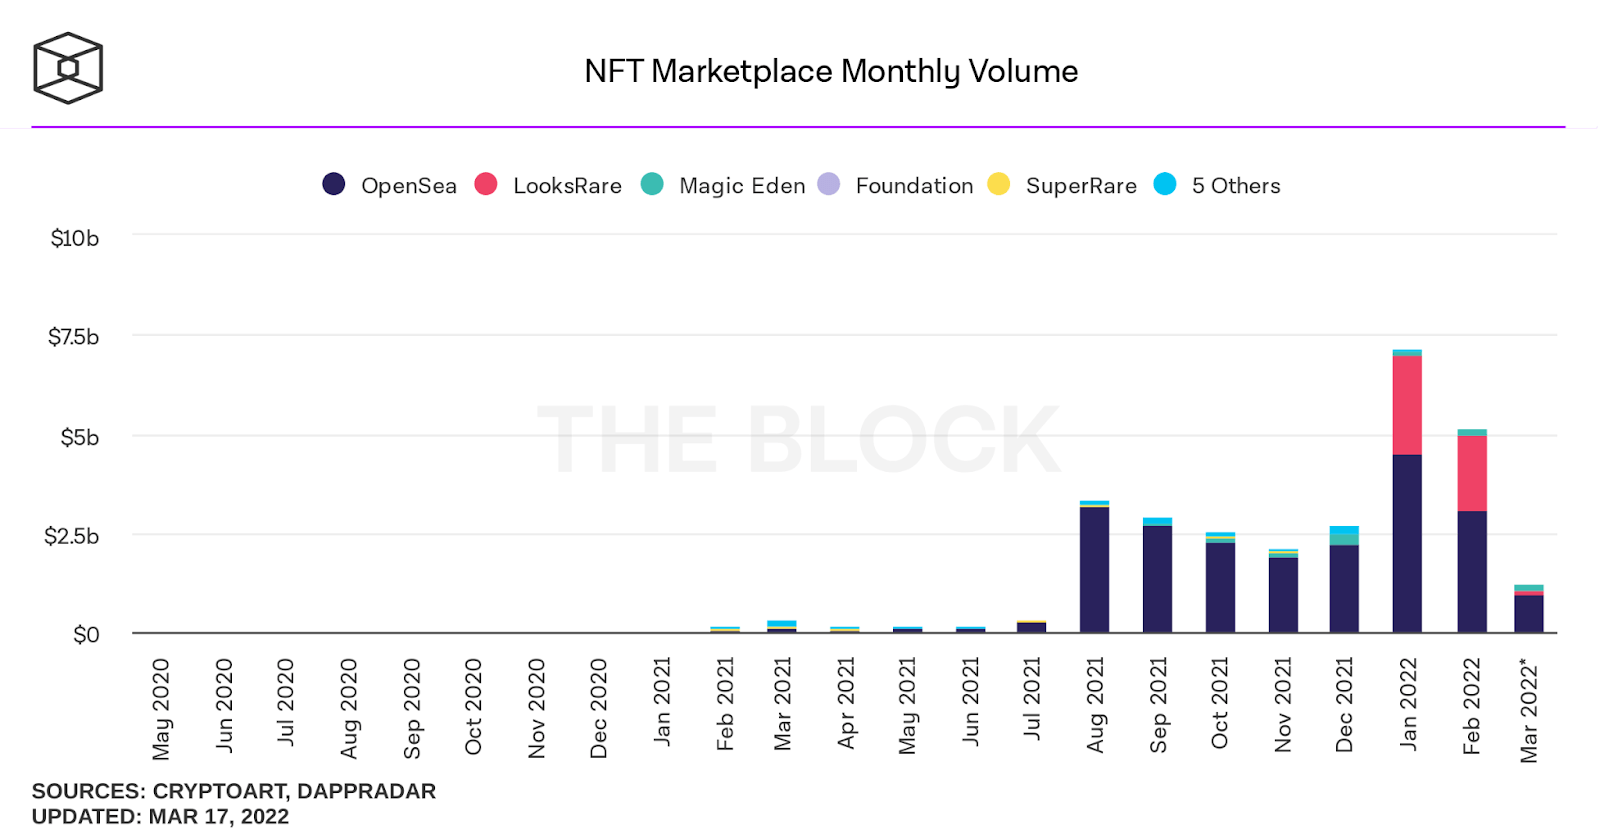 NFT markeyplace monthly volume